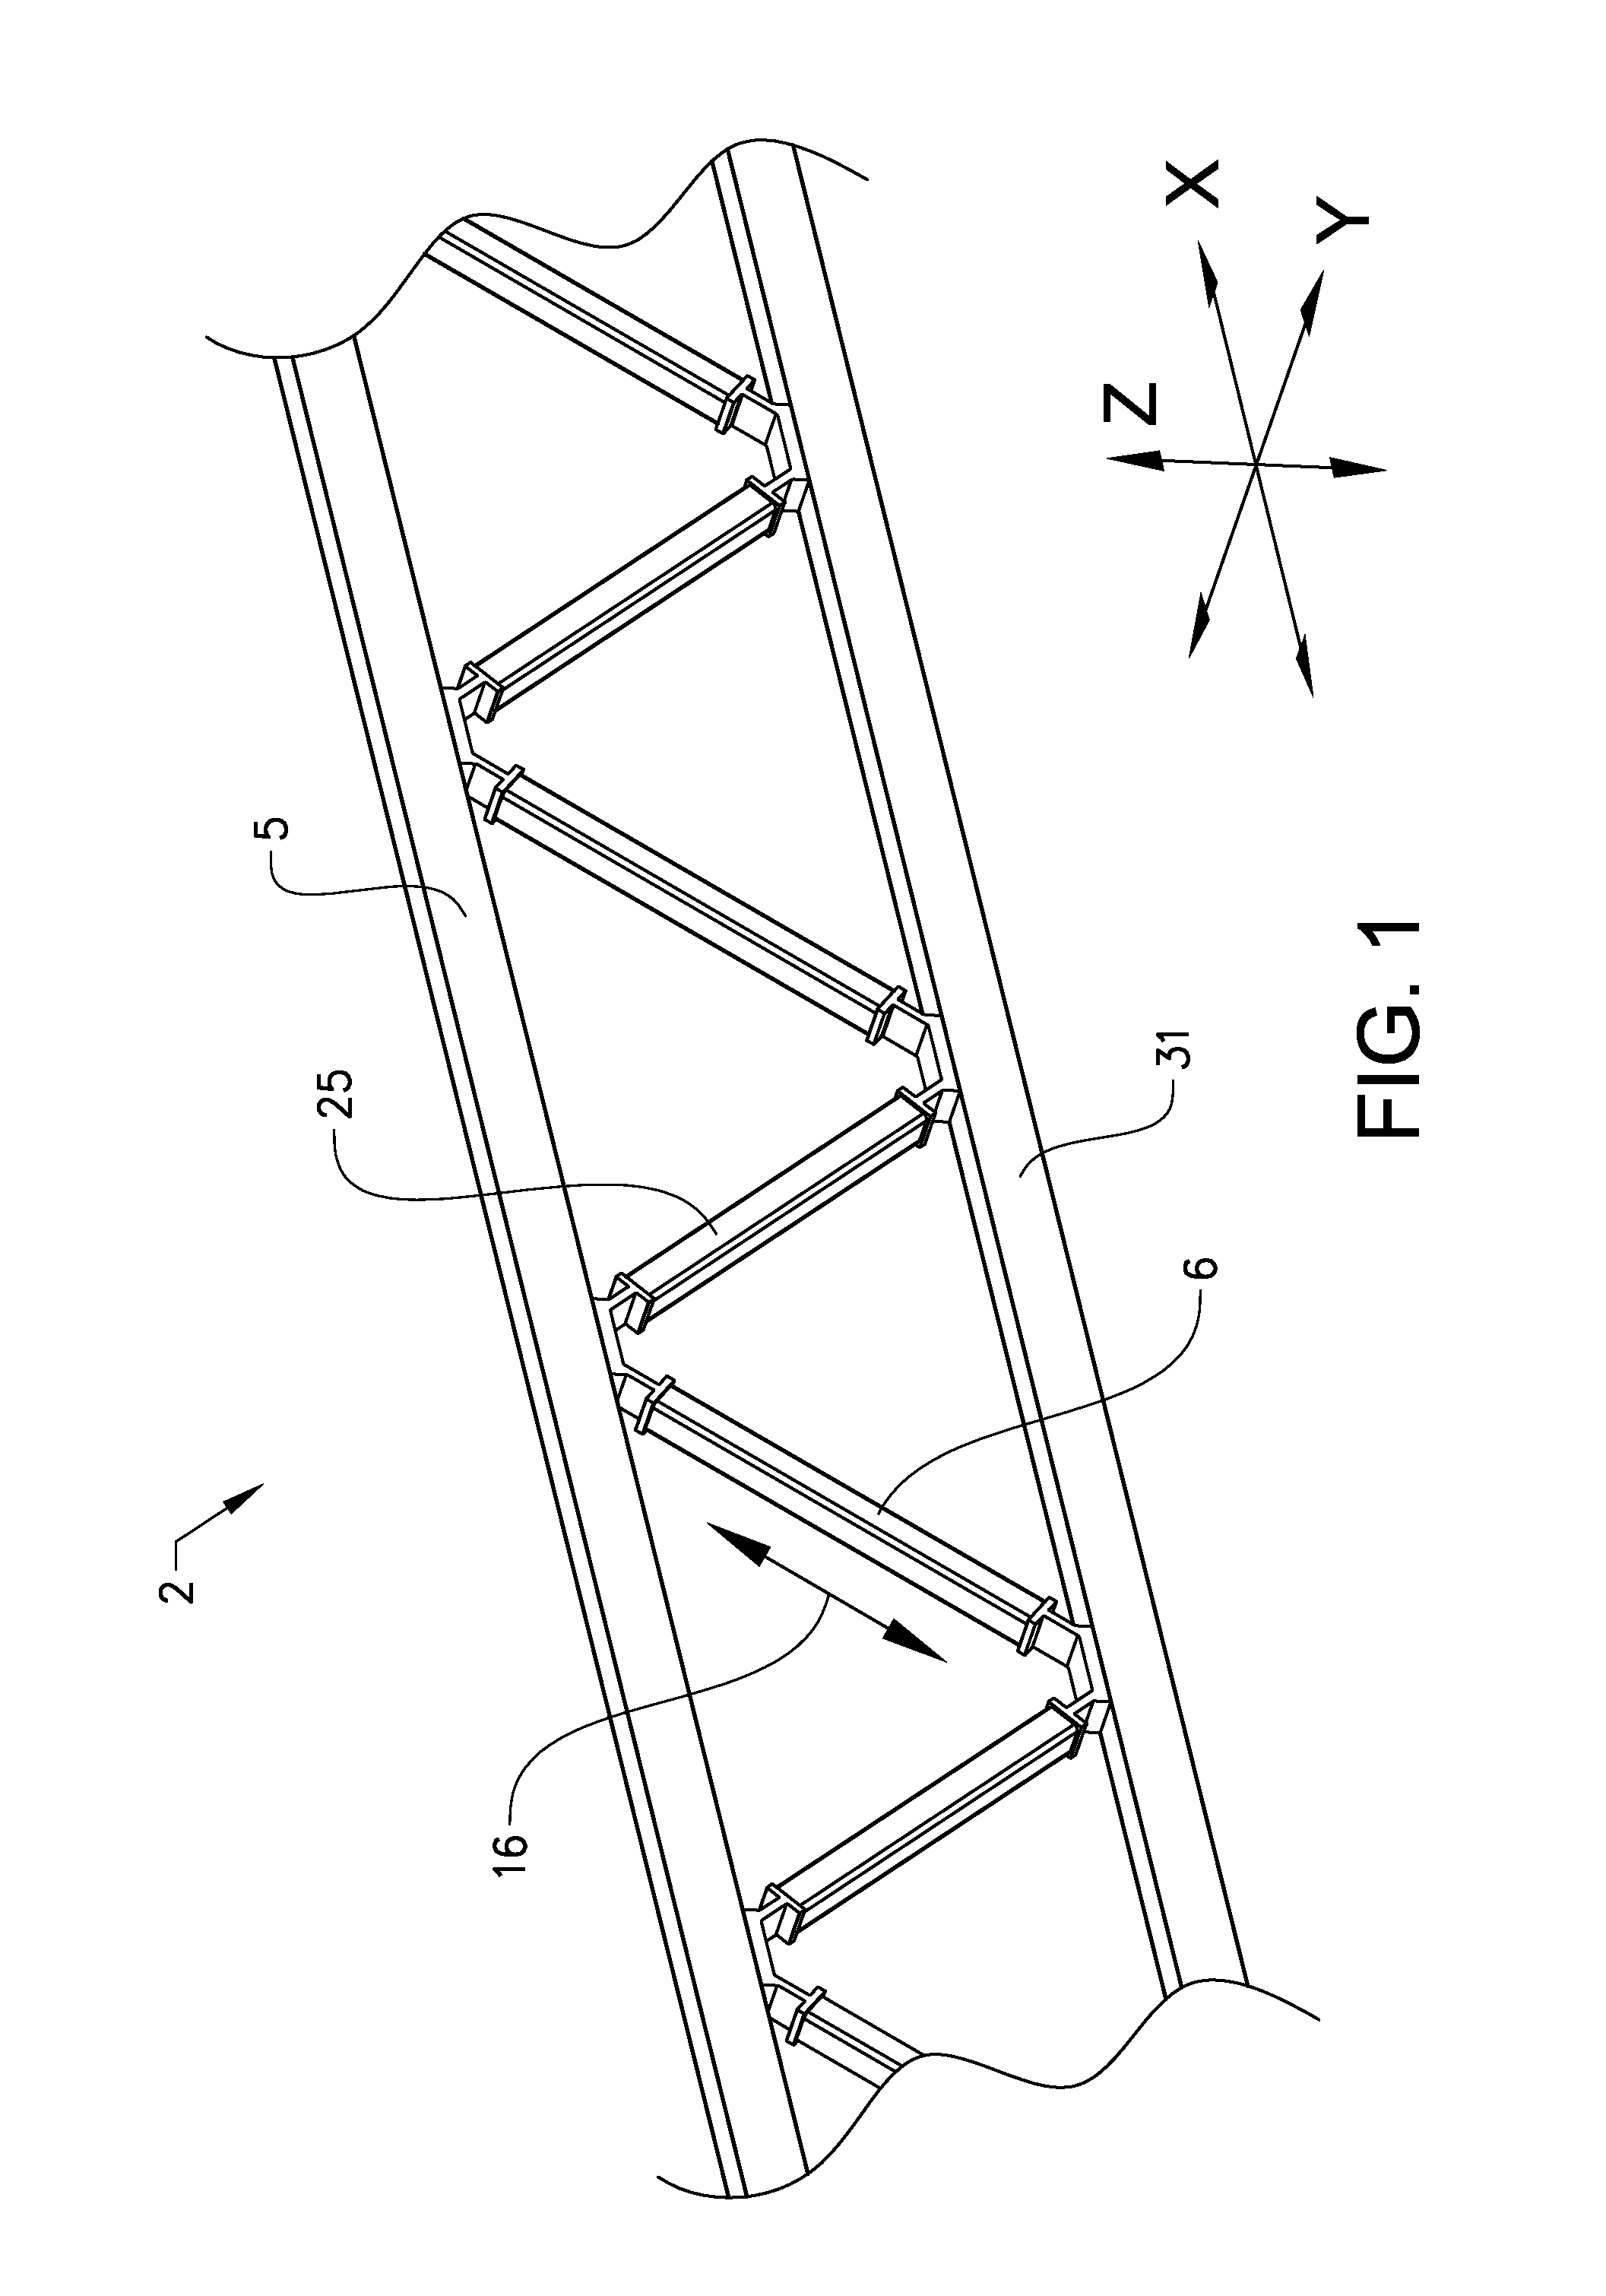 Mechanical coupling arrangement for a lattice support beam